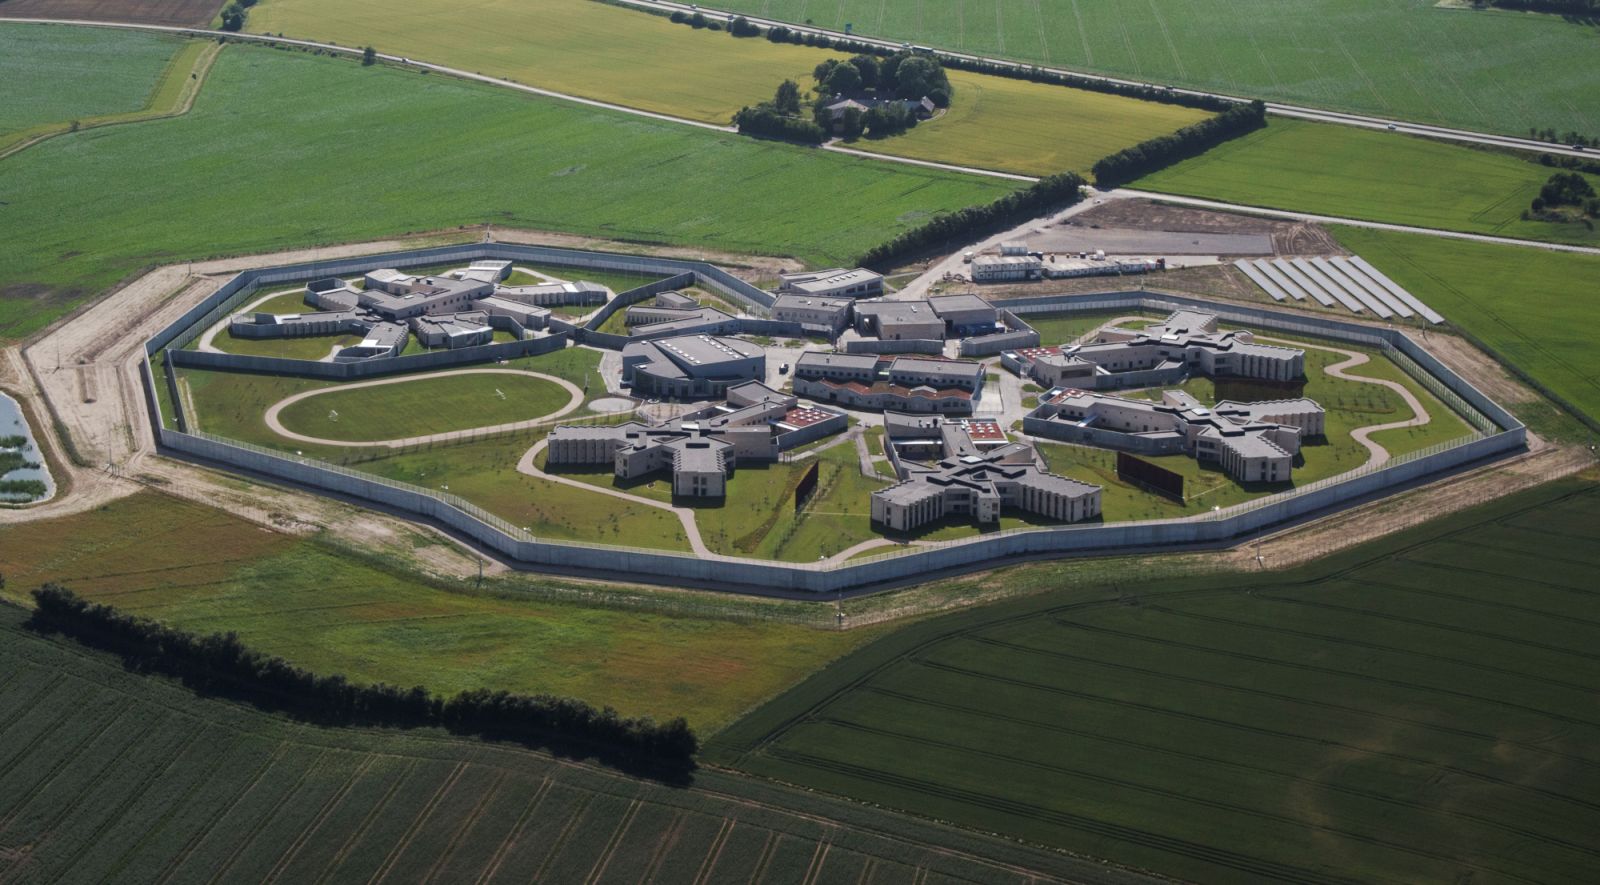 Denmark’s new state prison